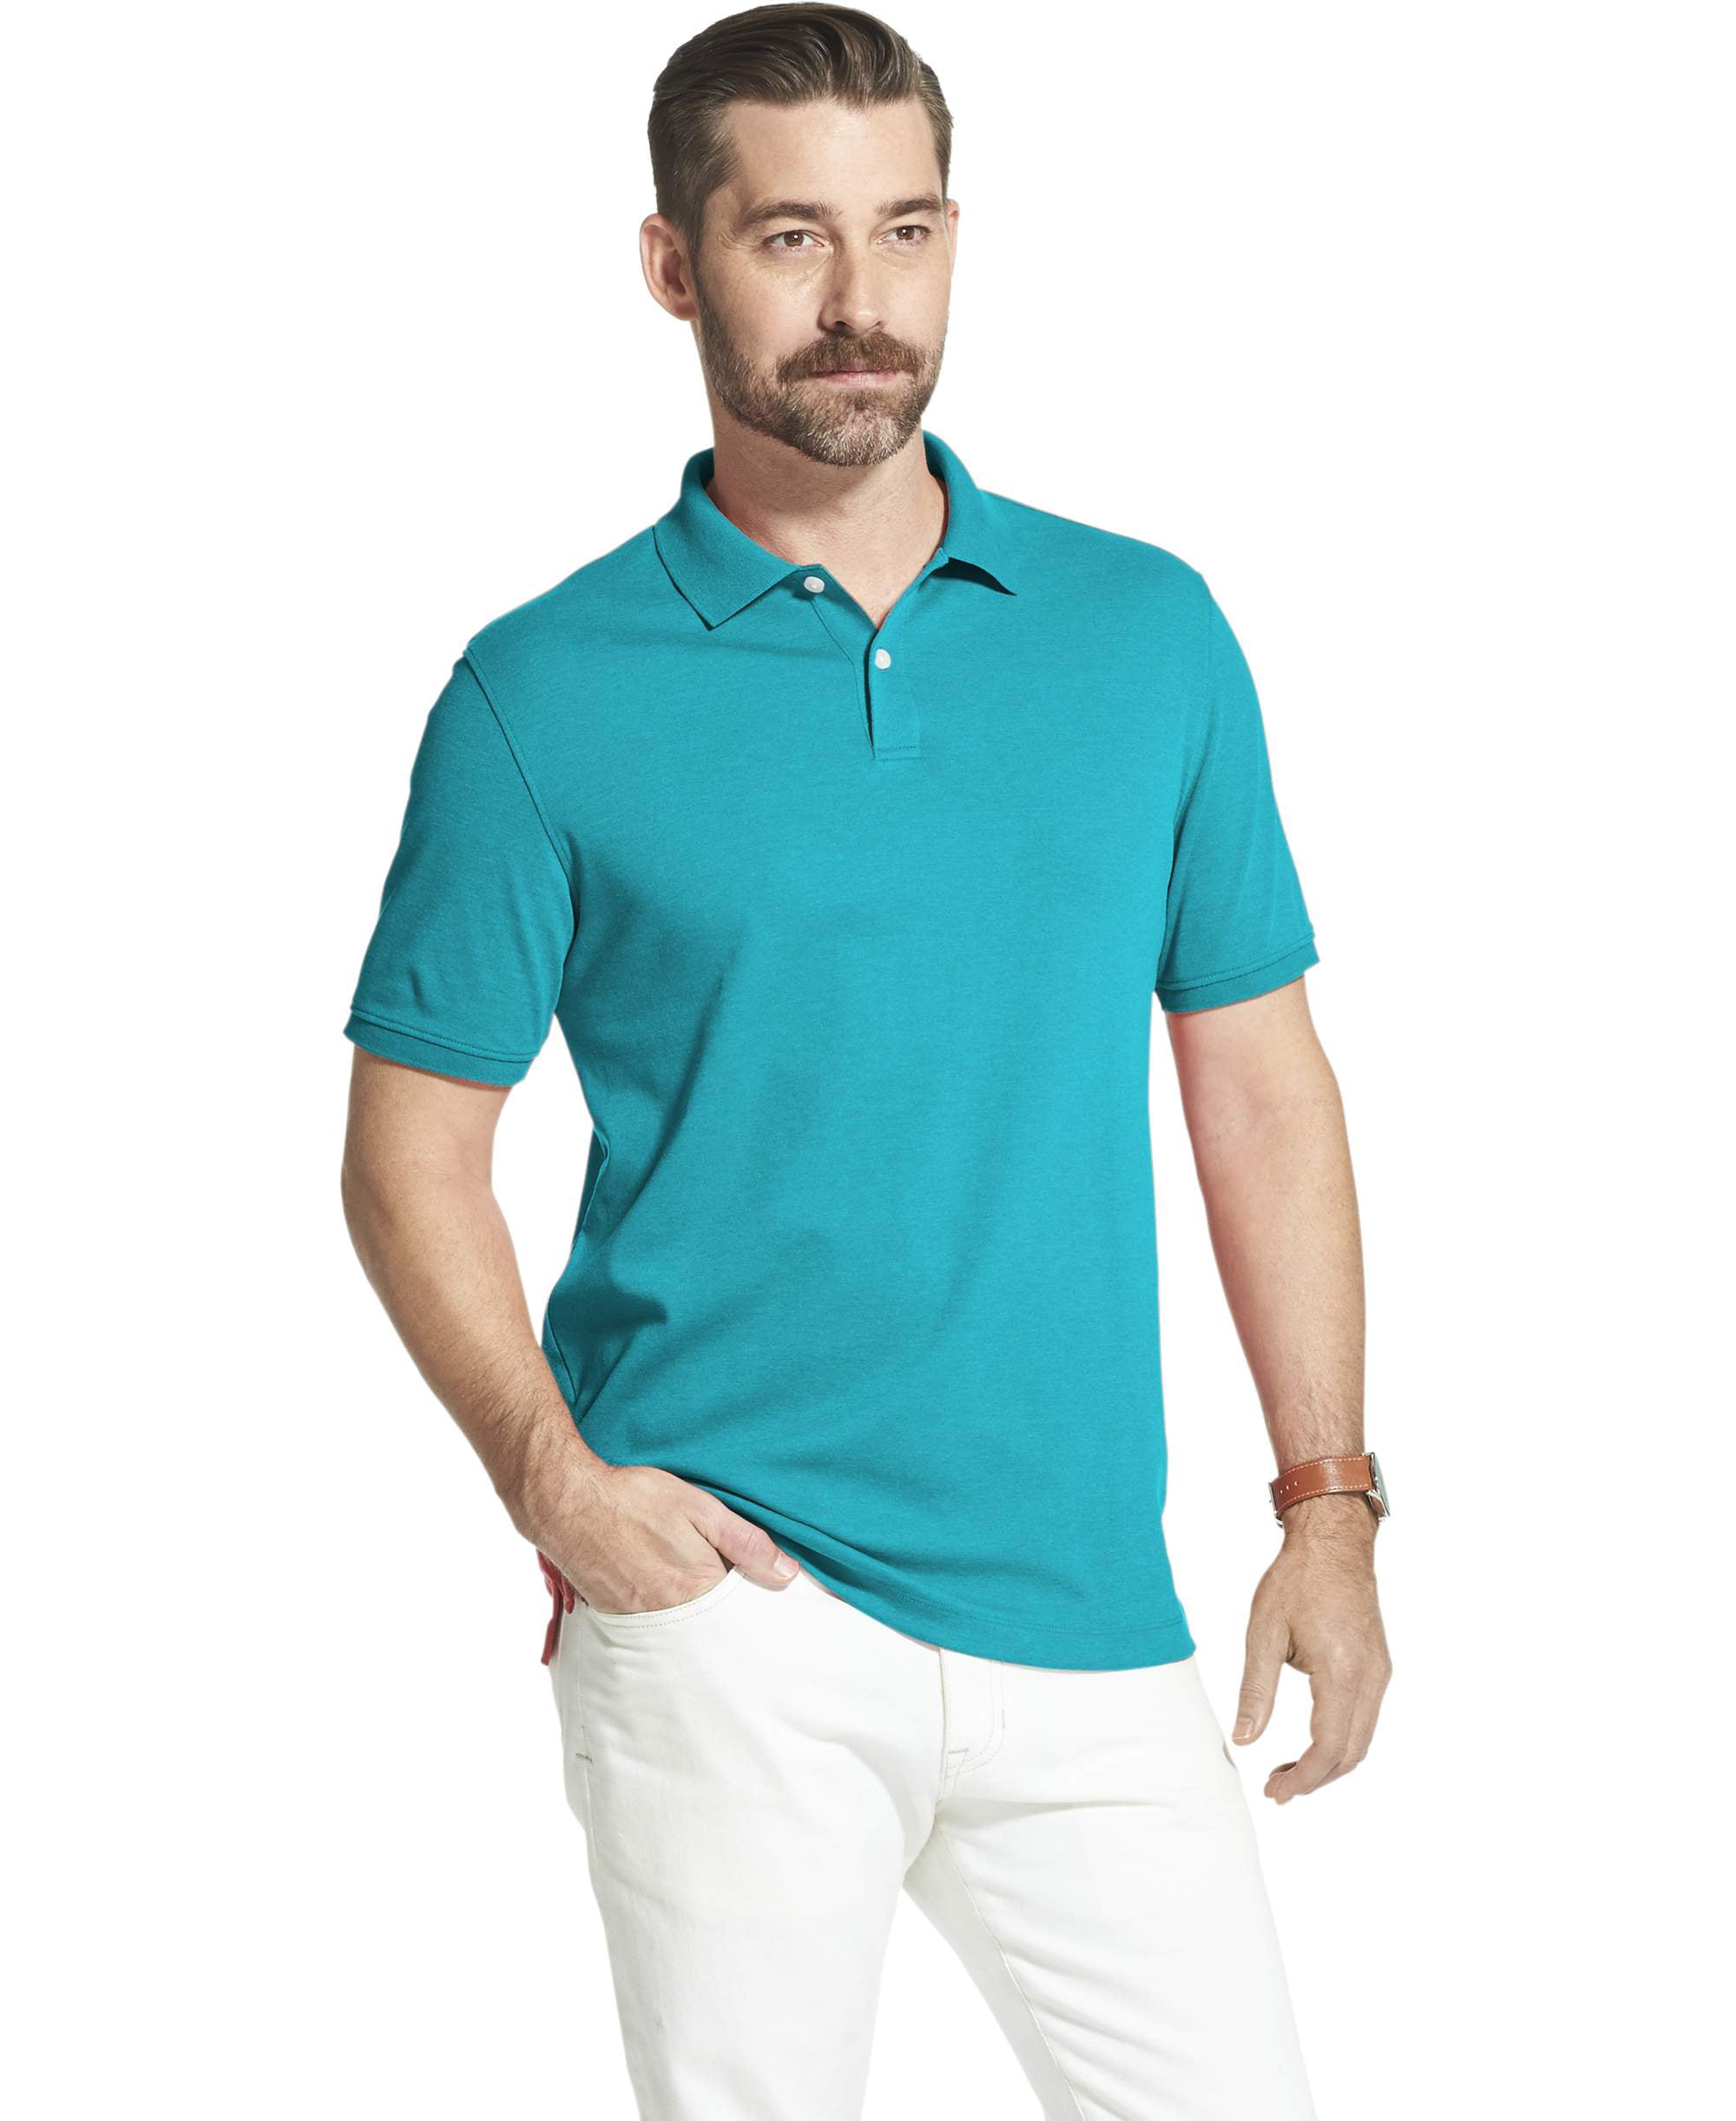 Arrow - Arrow Men's Solid Cool Cotton Polo Shirt - Walmart.com ...